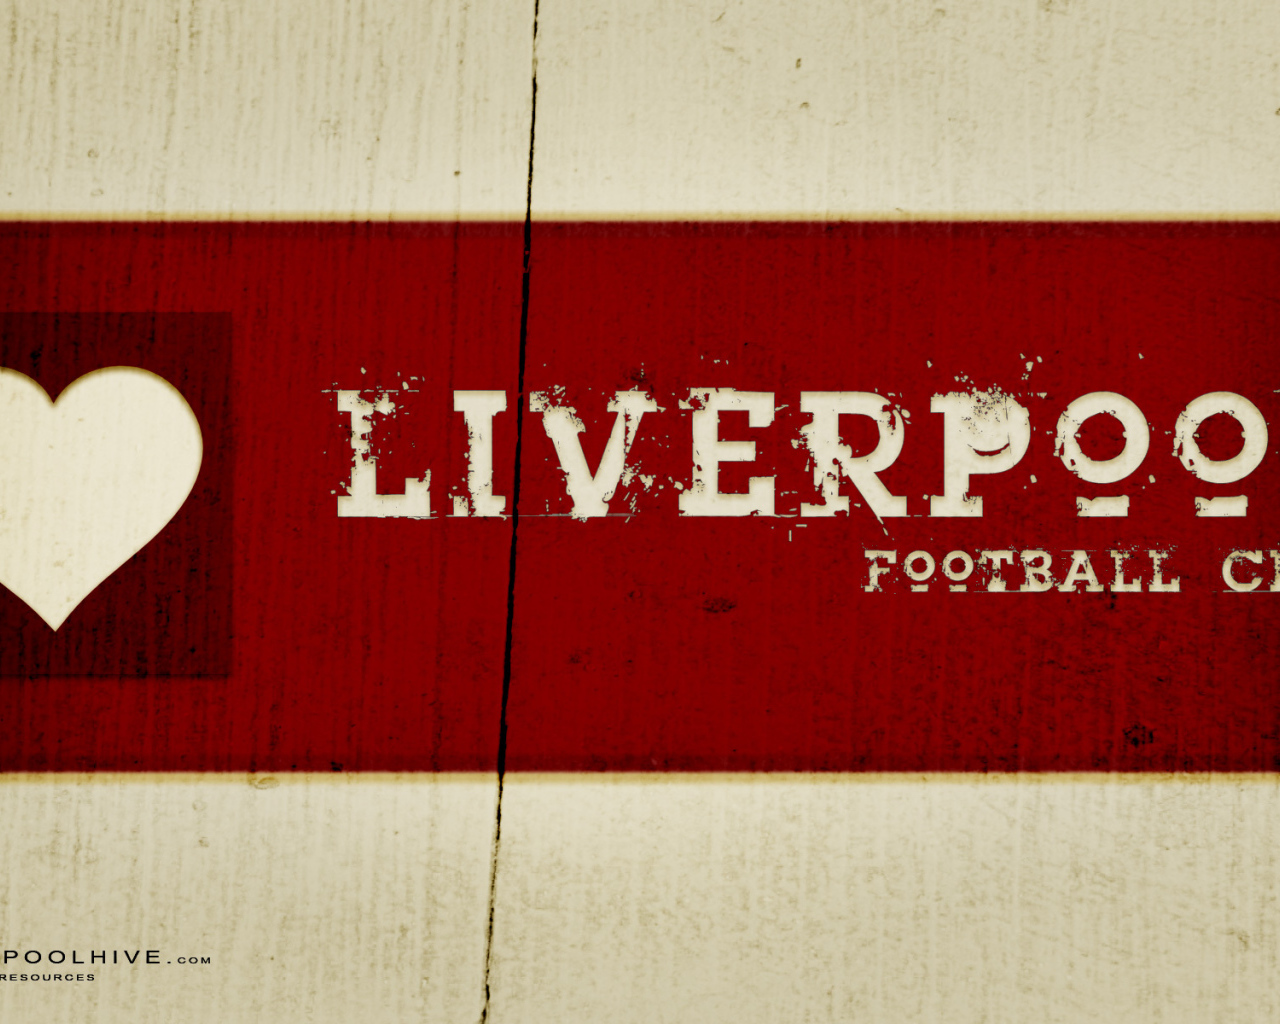 I love Liverpool